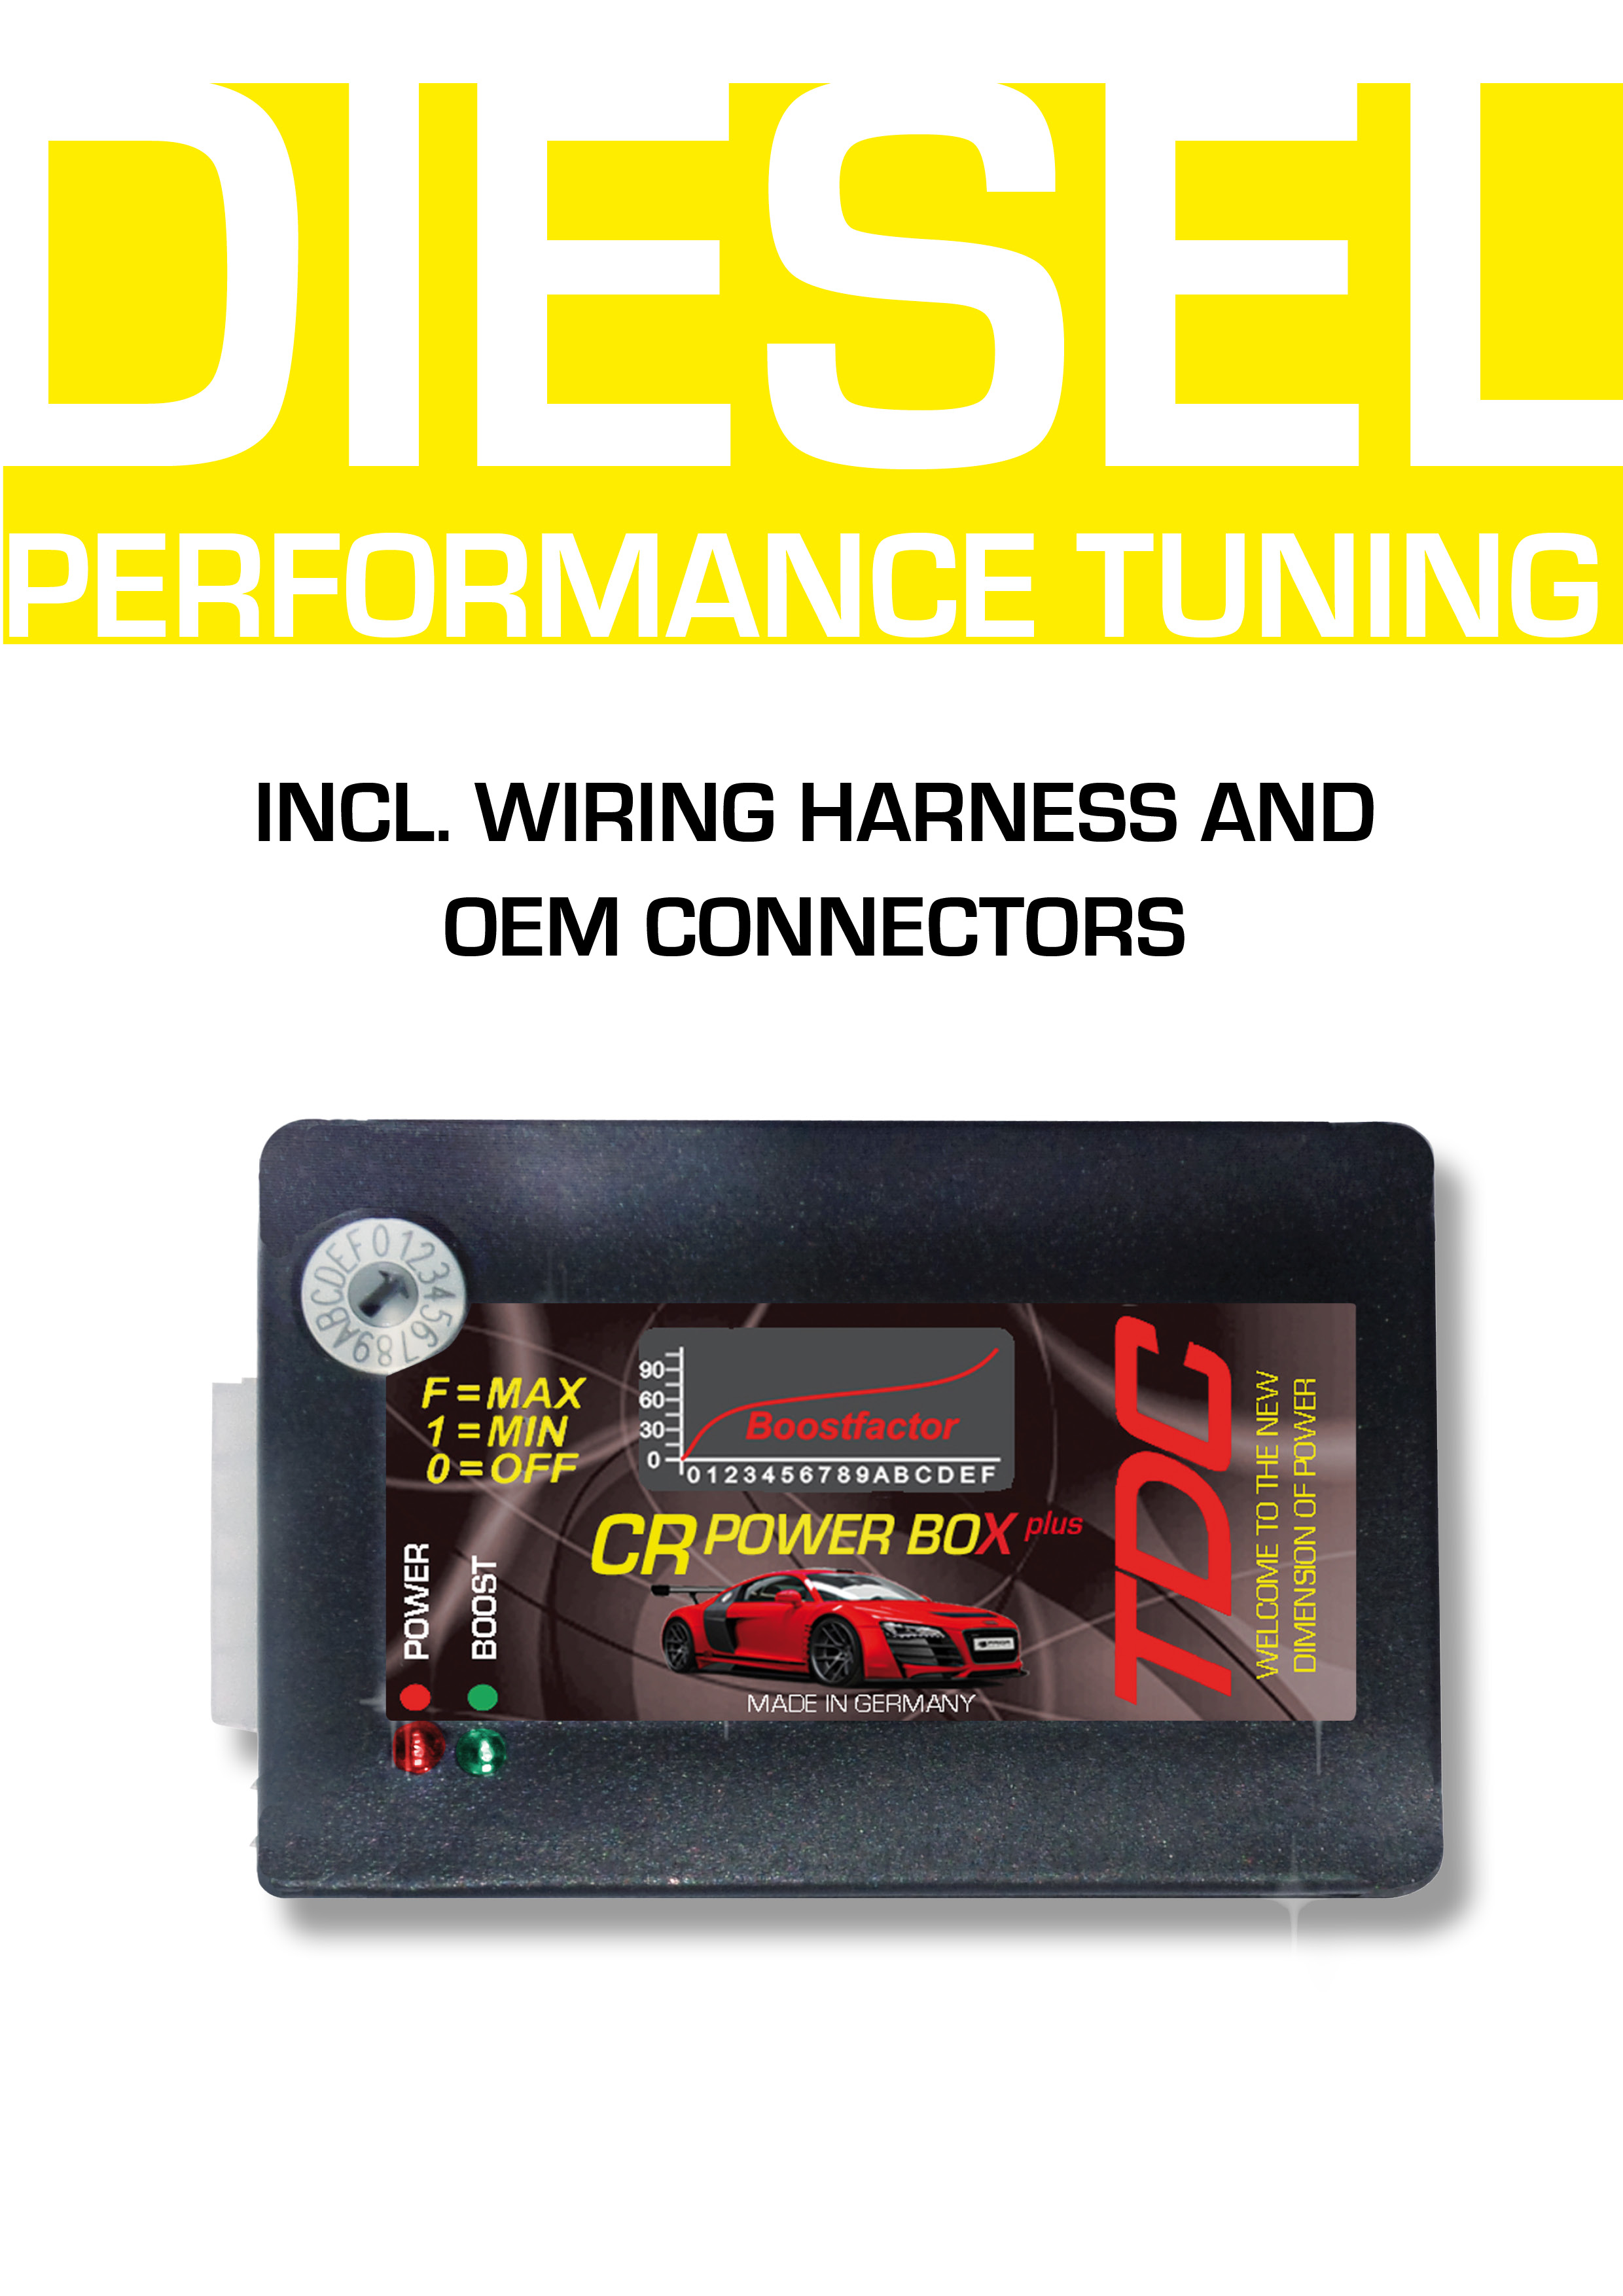 Details about   DIGITAL Power Box CRplus Chiptuning Diesel Tuning for MITSUBISHI Lancer 1.8 DI-D